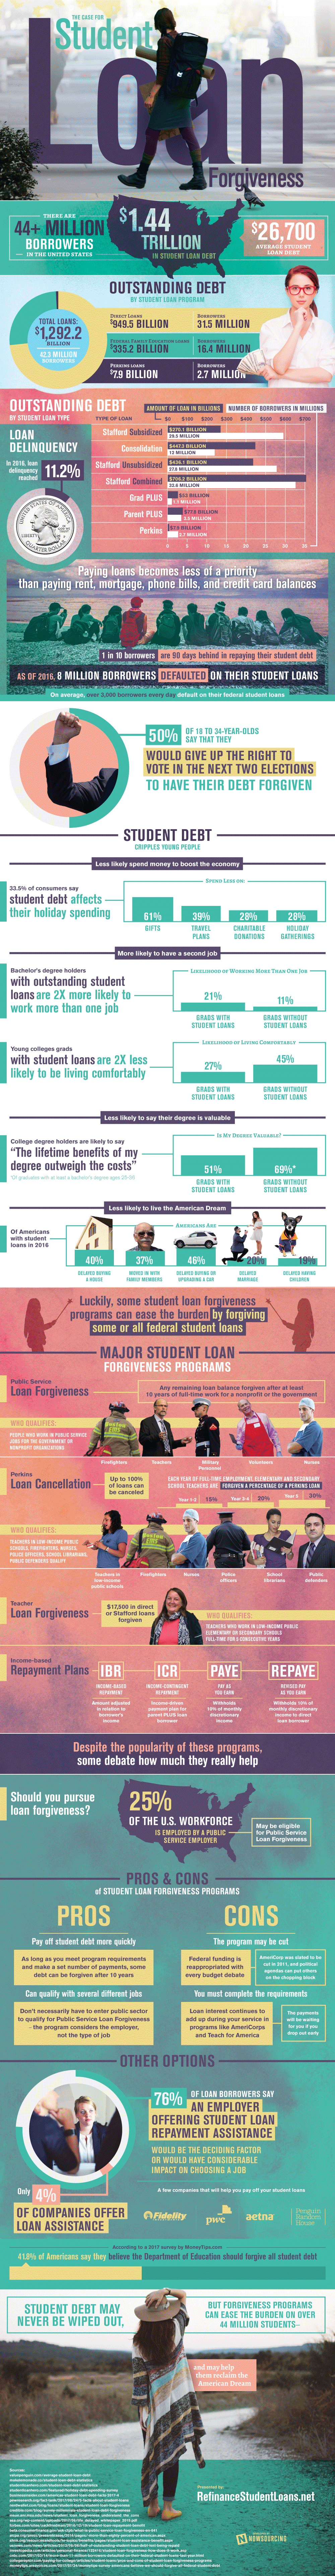 Infographic: Easing the Burden of Student Loan Debt